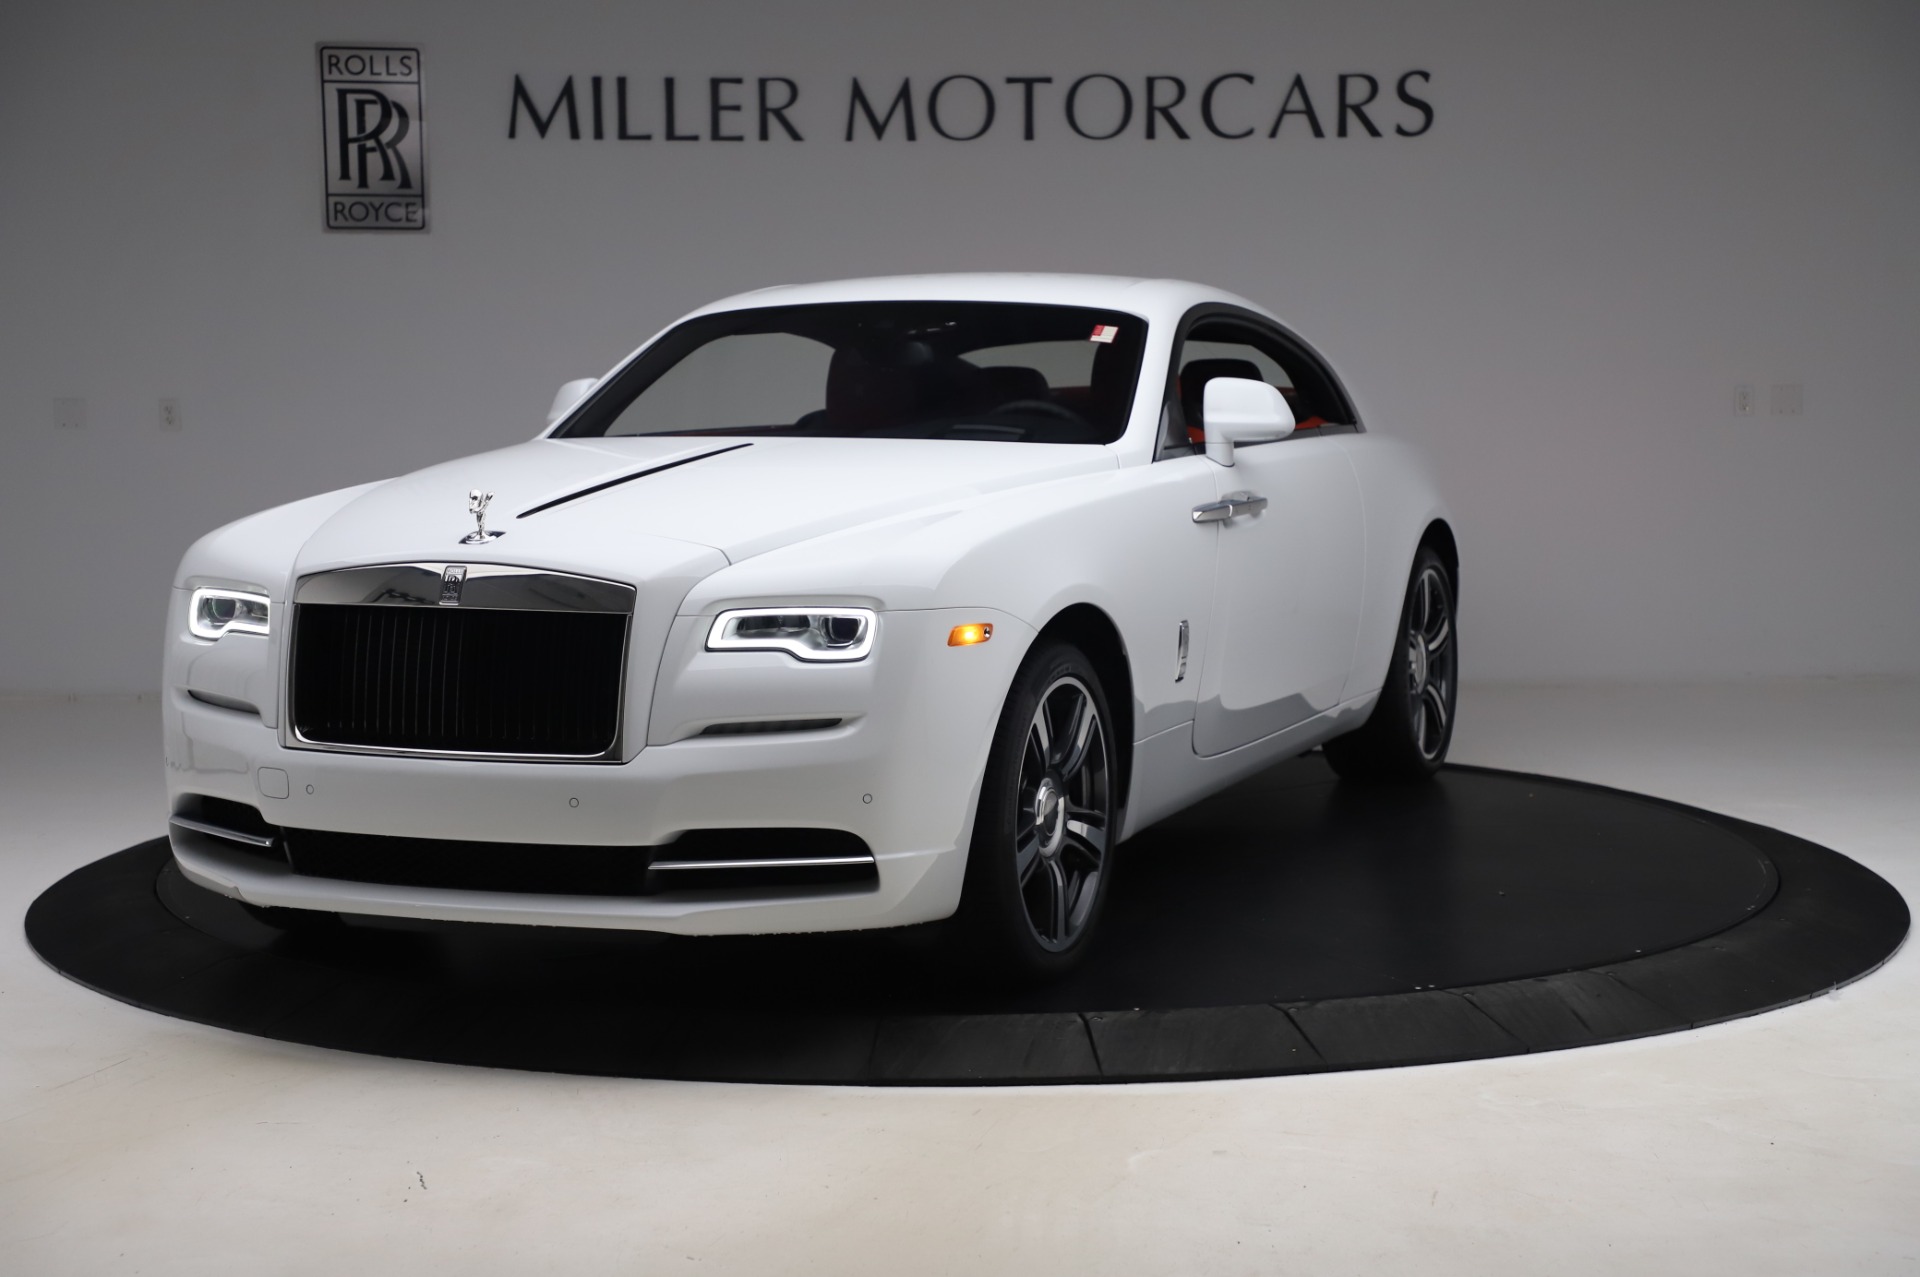 New 2020 Rolls Royce Wraith For Sale 392 325 Miller Motorcars